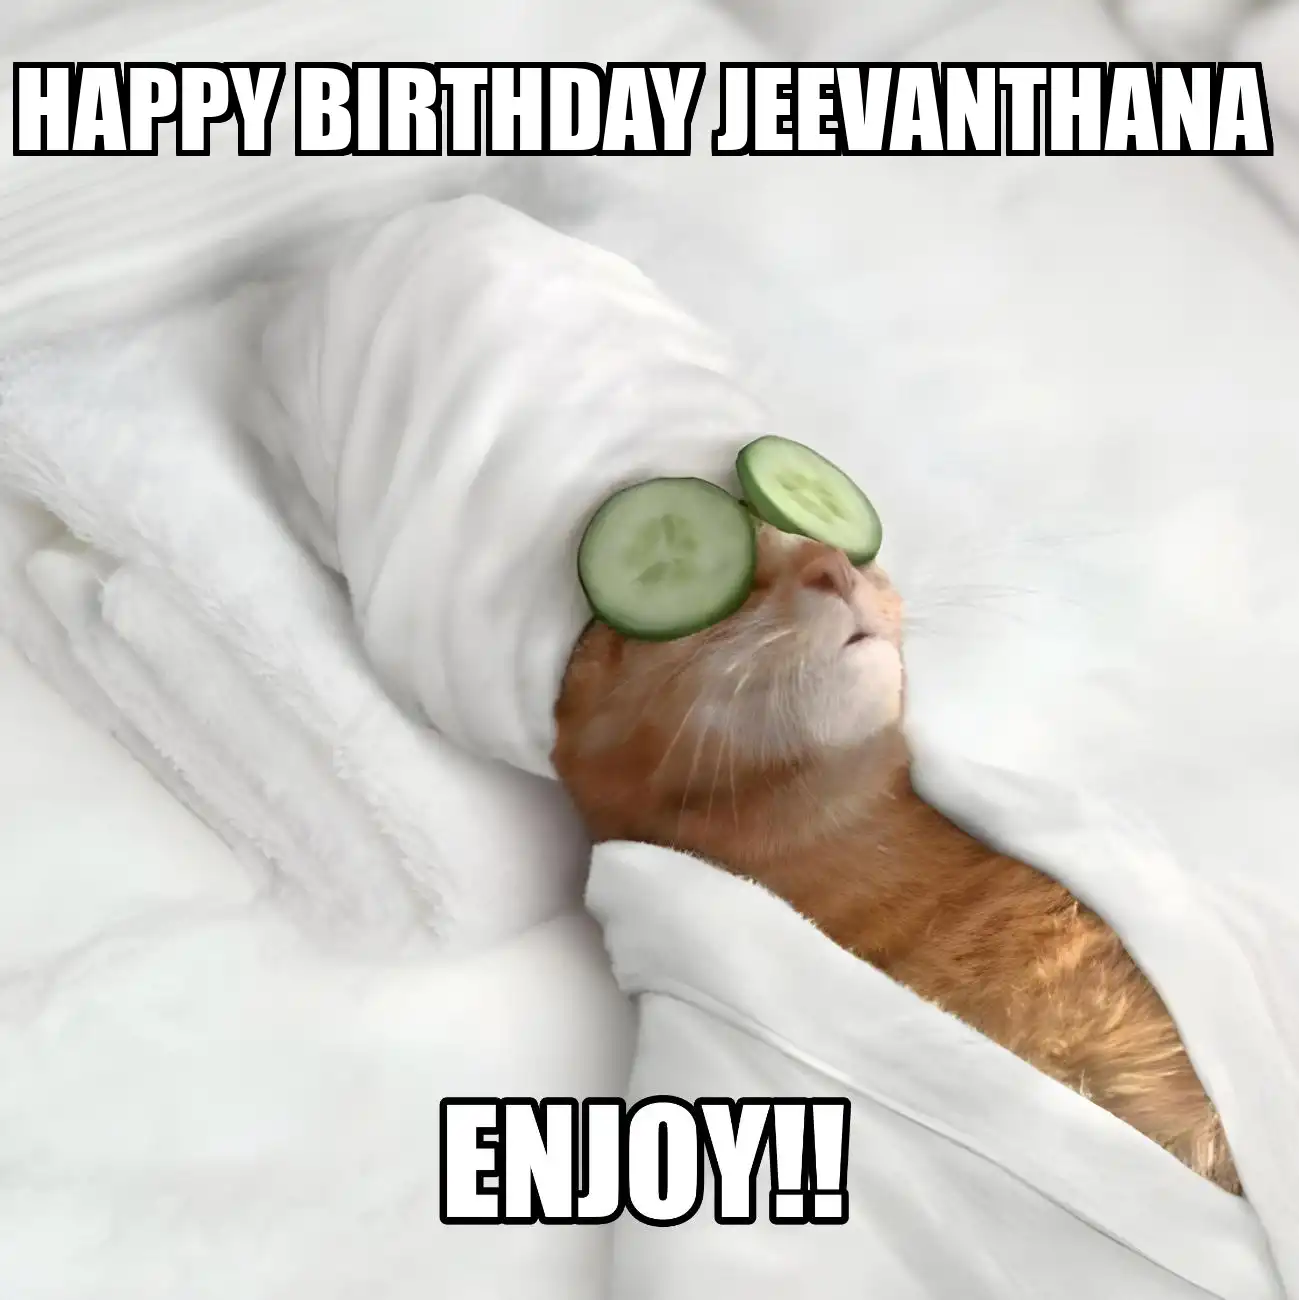 Happy Birthday Jeevanthana Enjoy Cat Meme